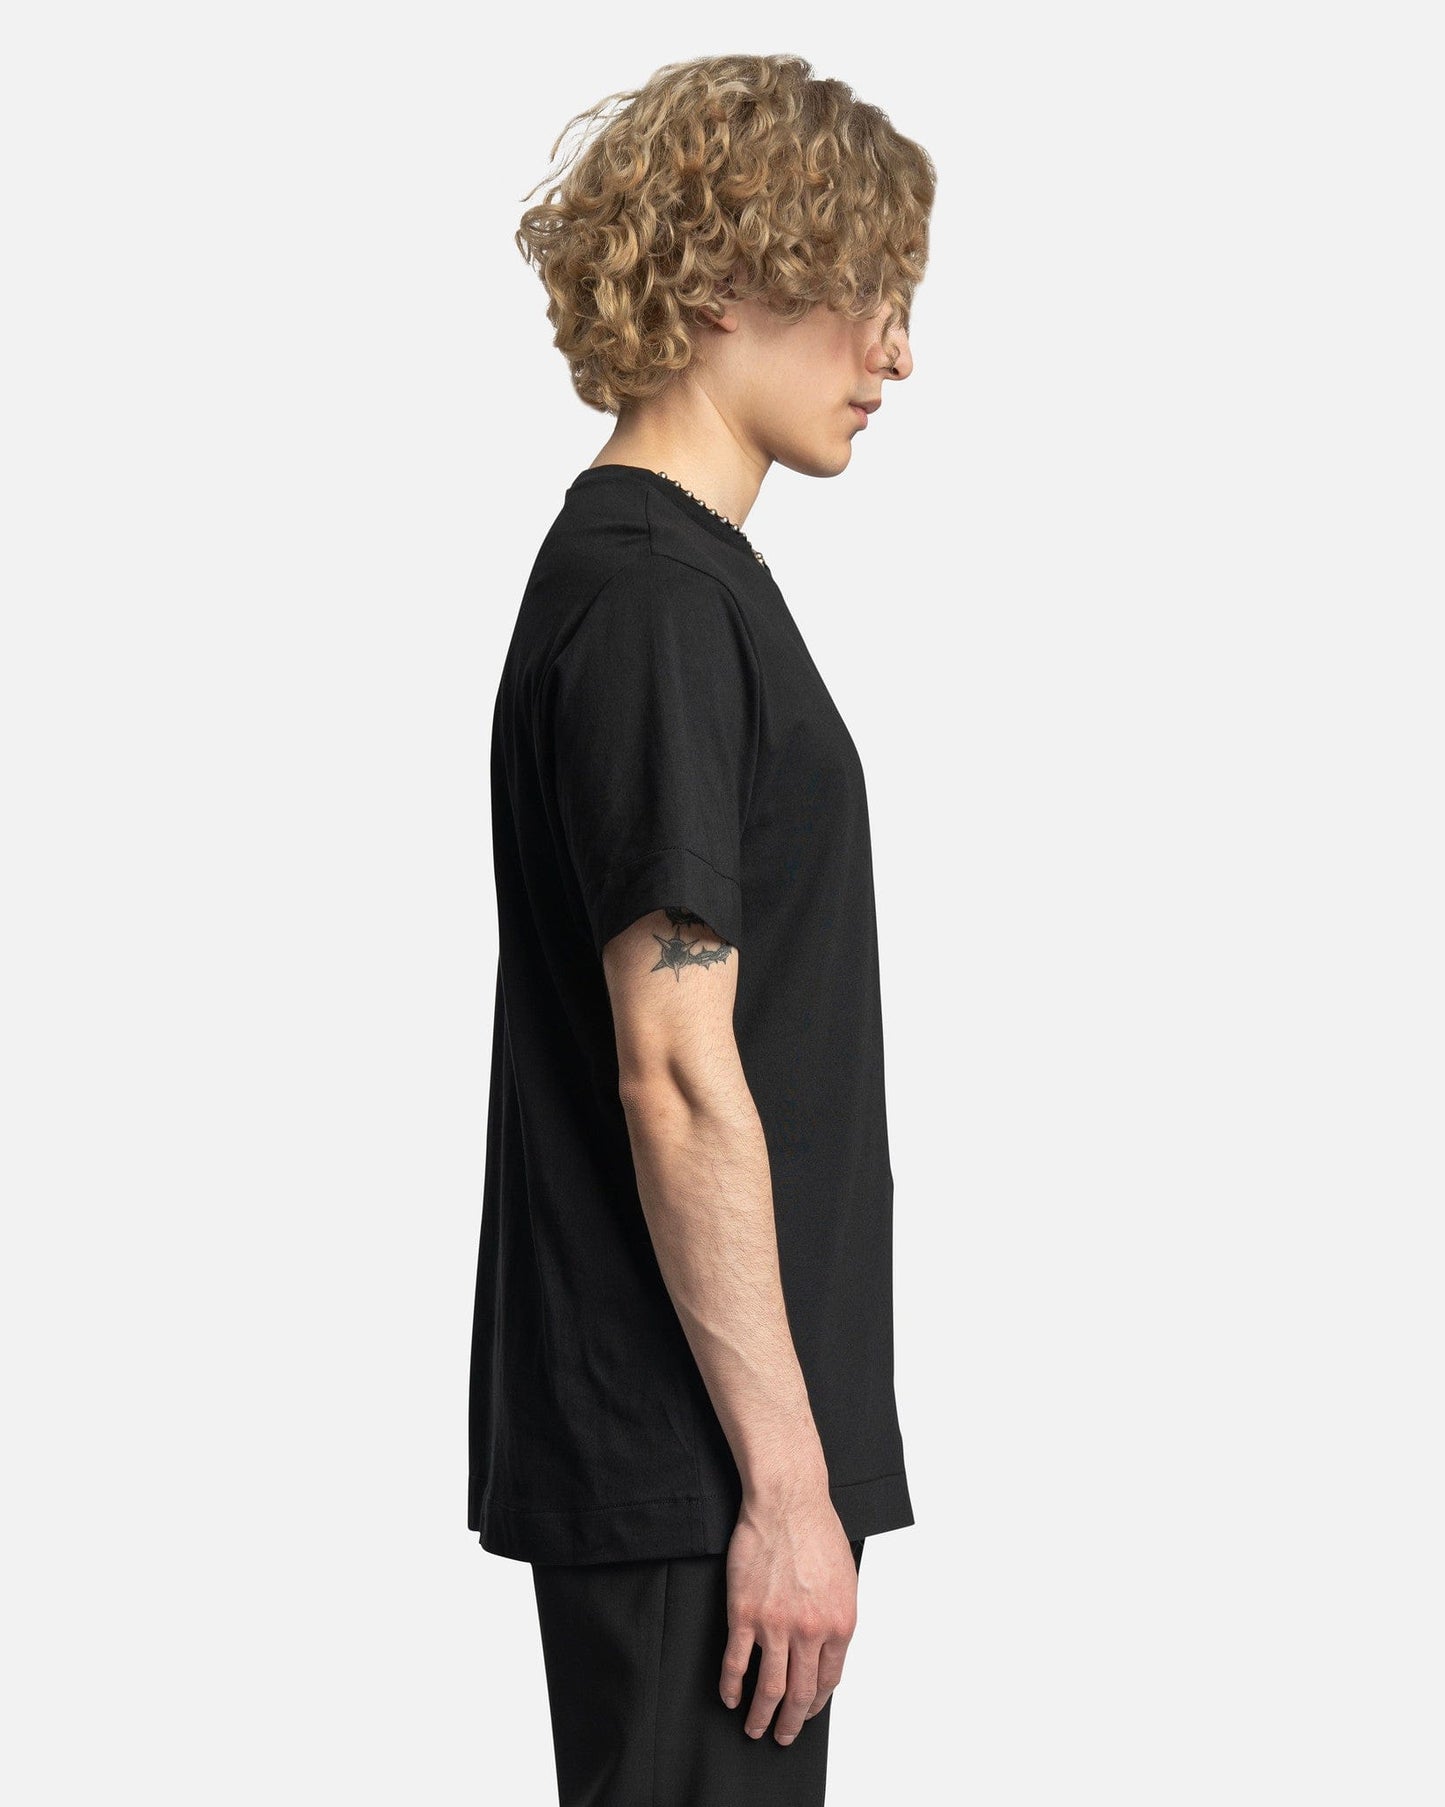 1017 ALYX 9SM Men's T-Shirts Ball Chain S/S T-Shirt in Black